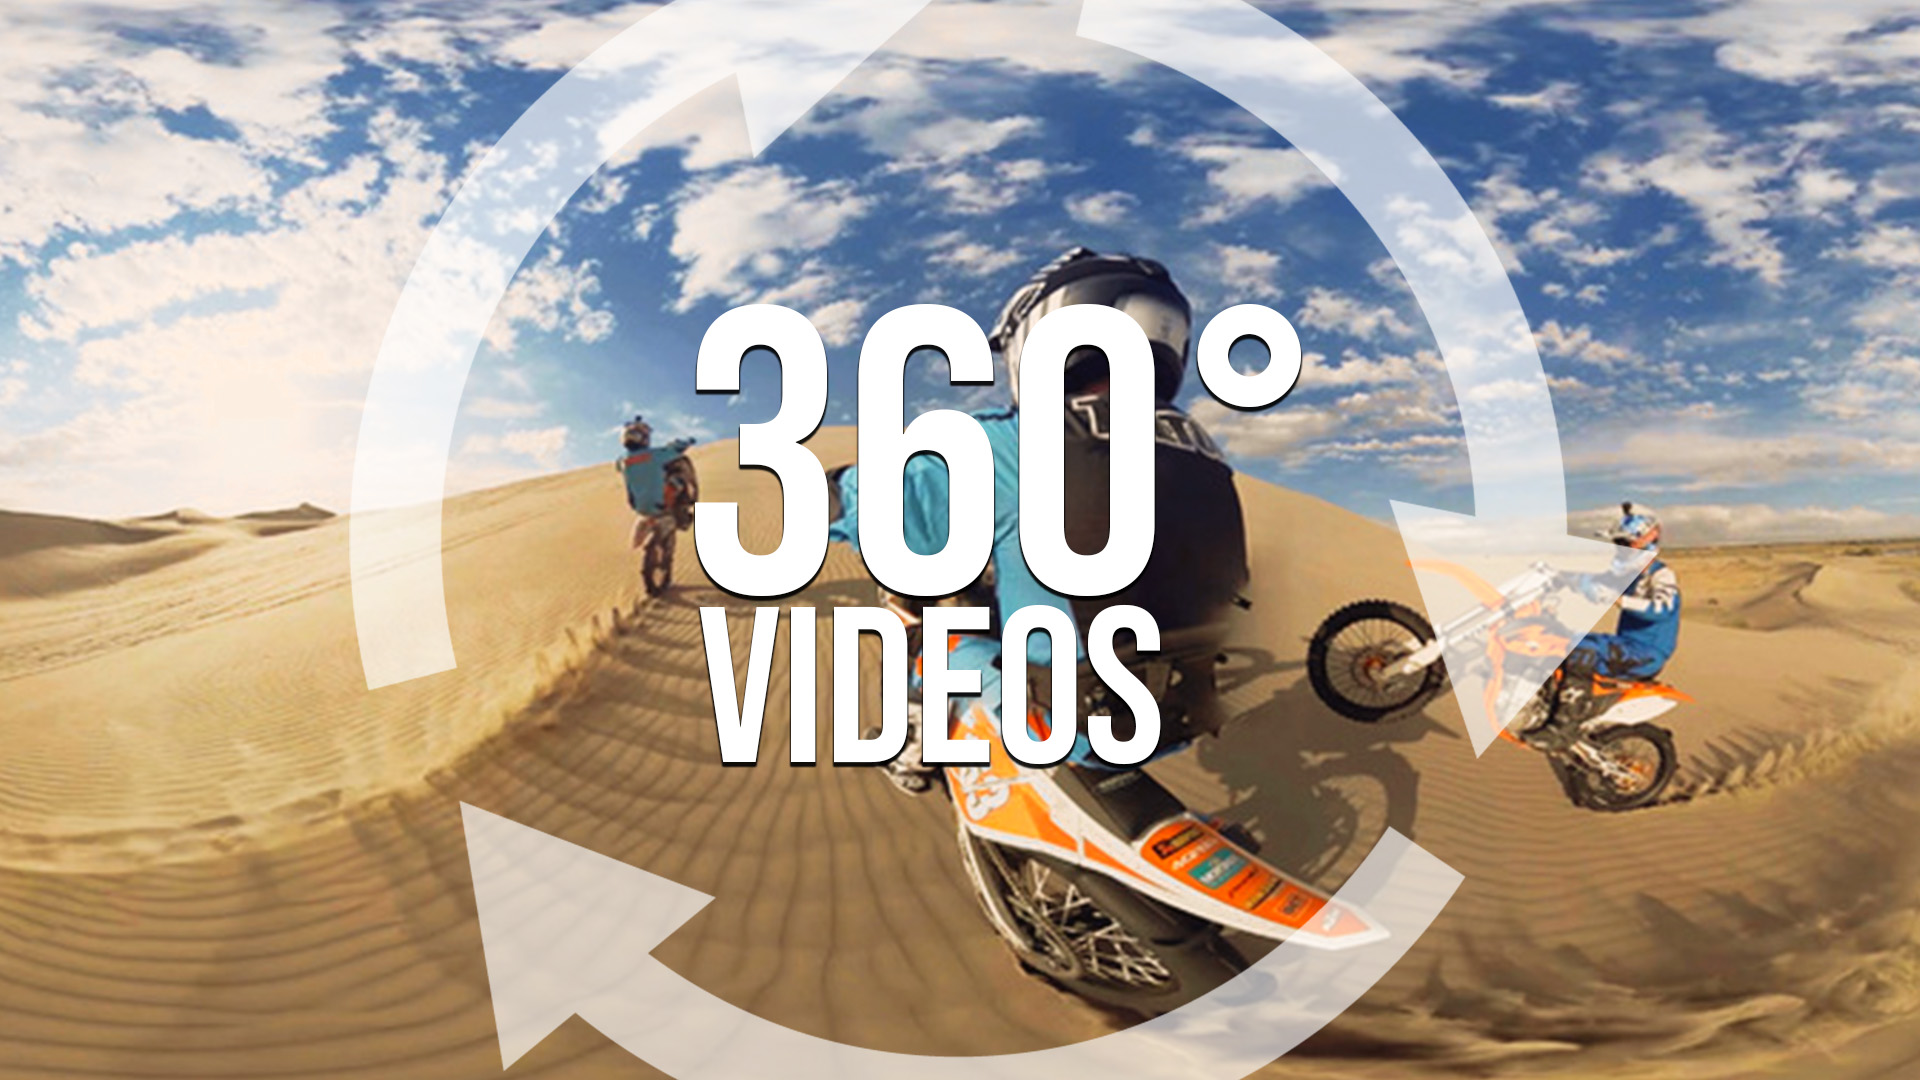 360 VR видео: производство контента и особенности формата